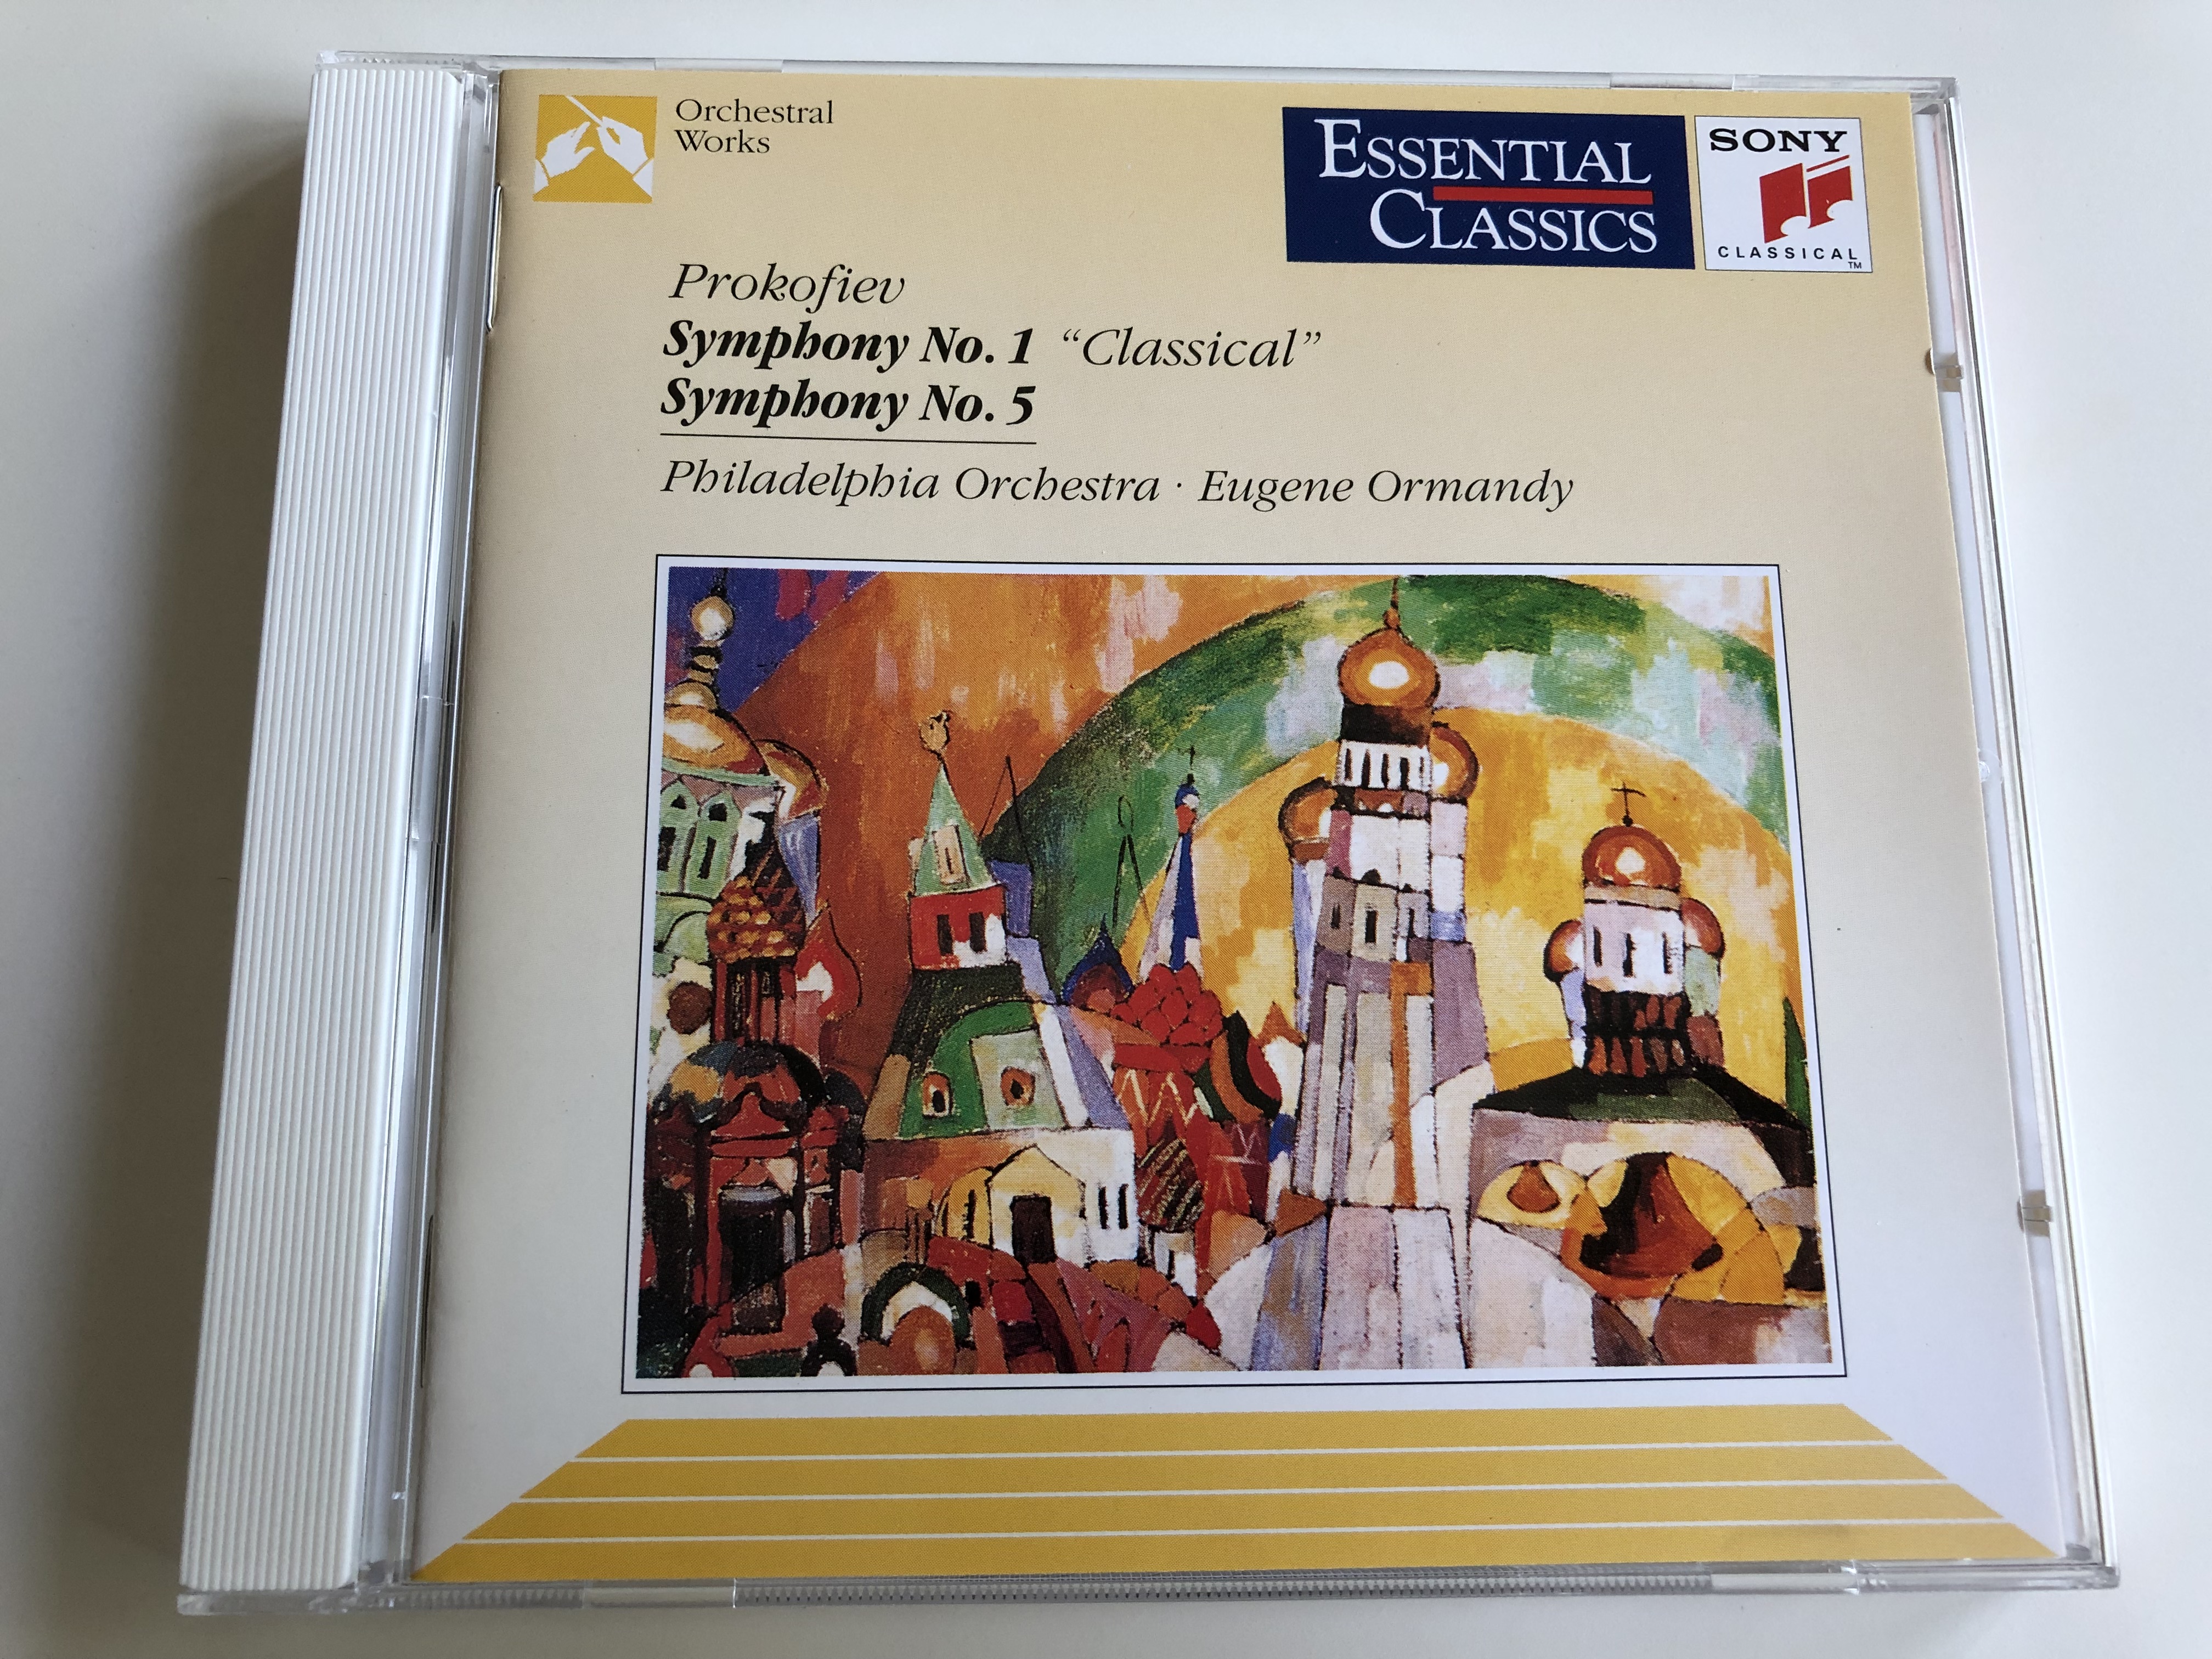 -prokofiev-symphony-no.-1-classical-symphony-no.-5-philadelphia-orchestra-conducted-by-eugene-ormandy-essential-classics-audio-cd-1993-1-.jpg